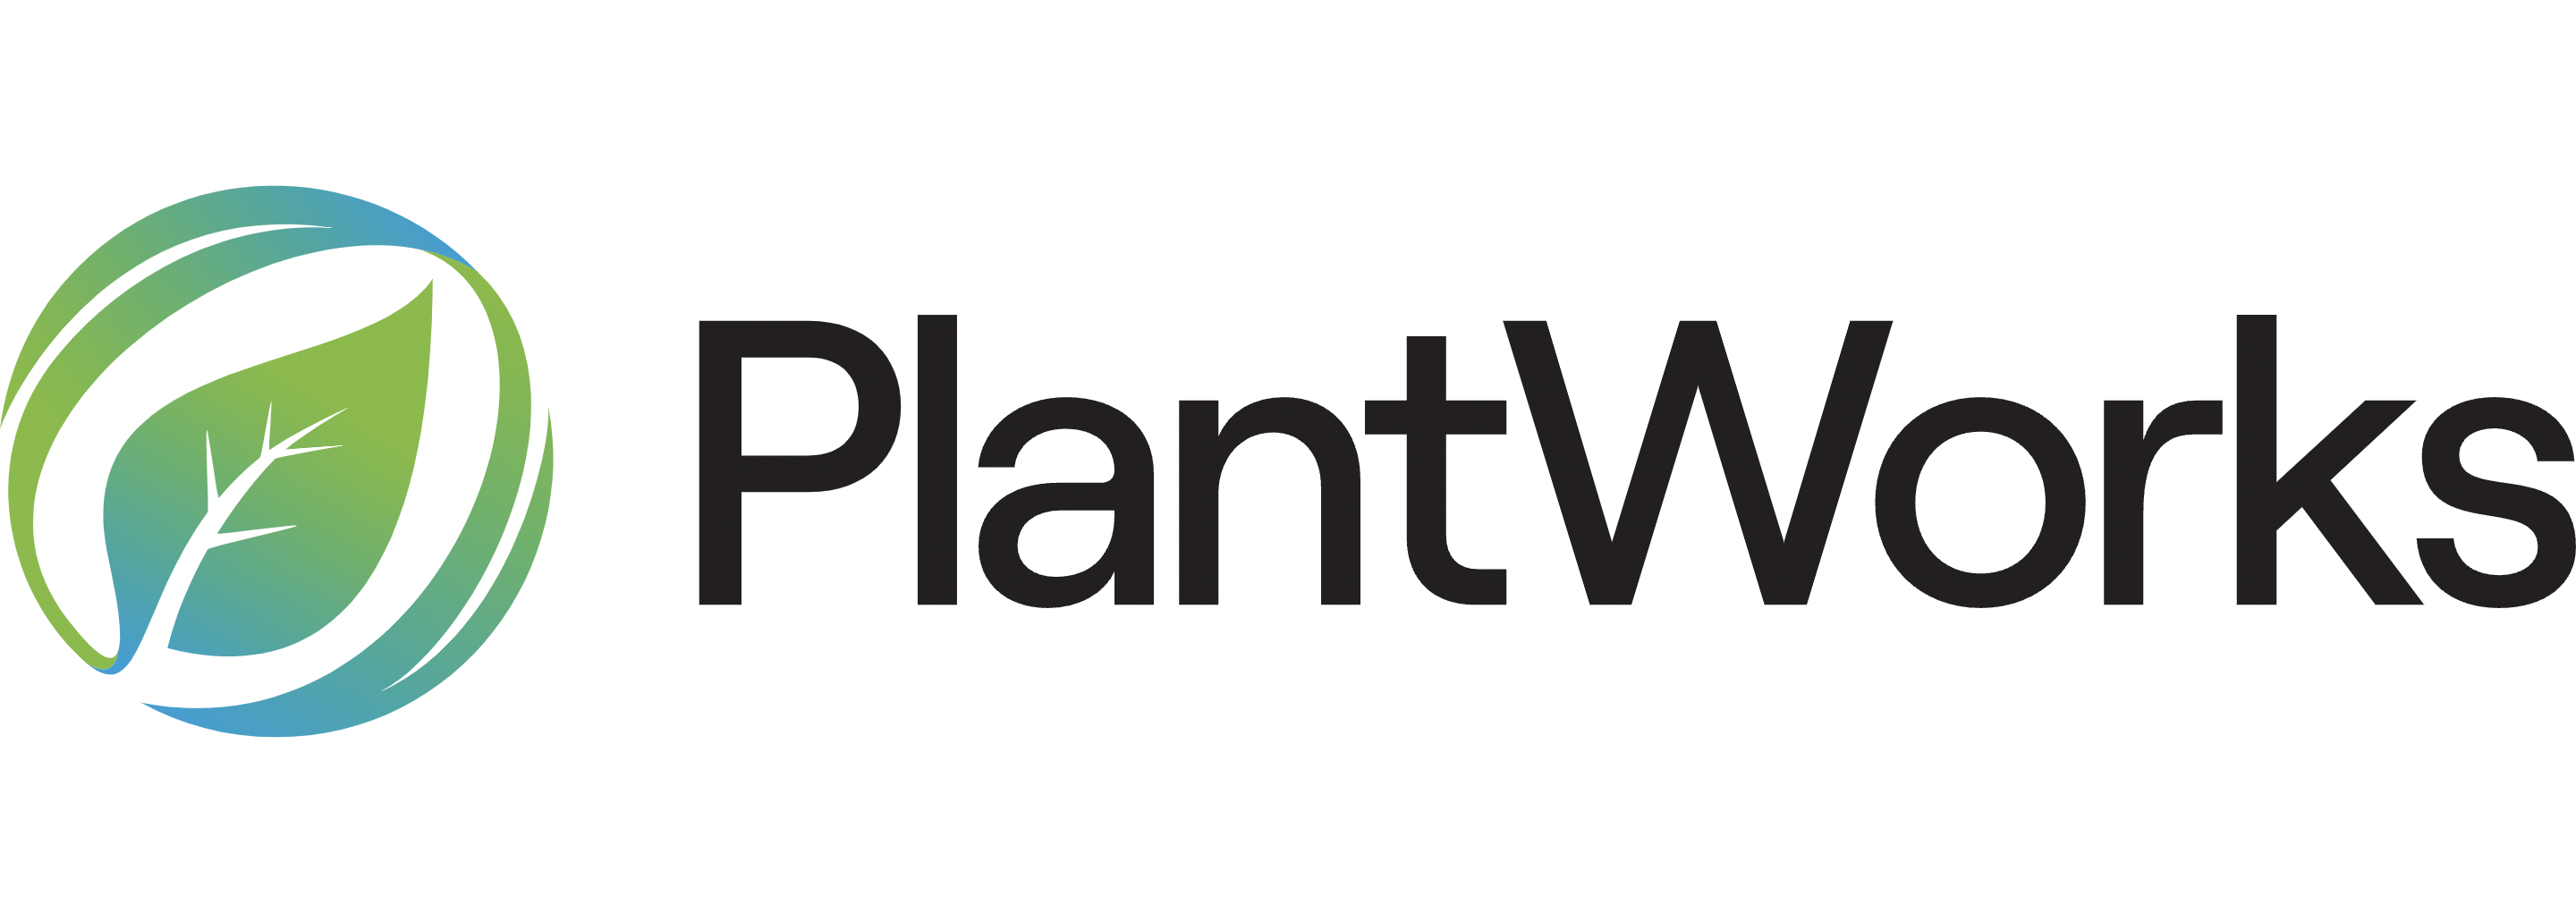 PLANTWORKS